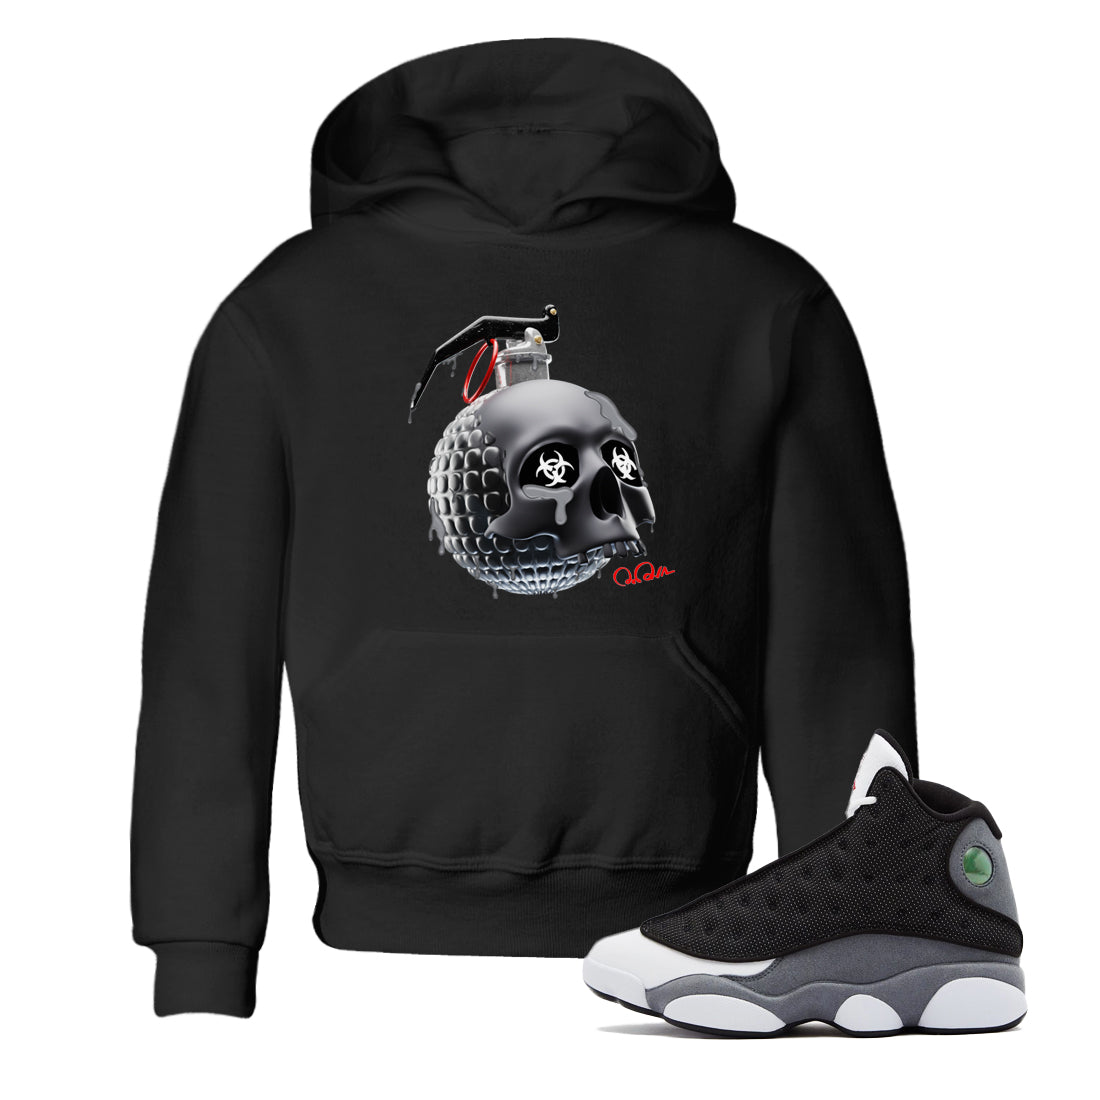 Air Jordan 13 Black Flint Sneaker Tees Drip Gear Zone Skull Bomb Sneaker Tees AJ13 Retro Black Flint Shirt Kids Shirts Black 1